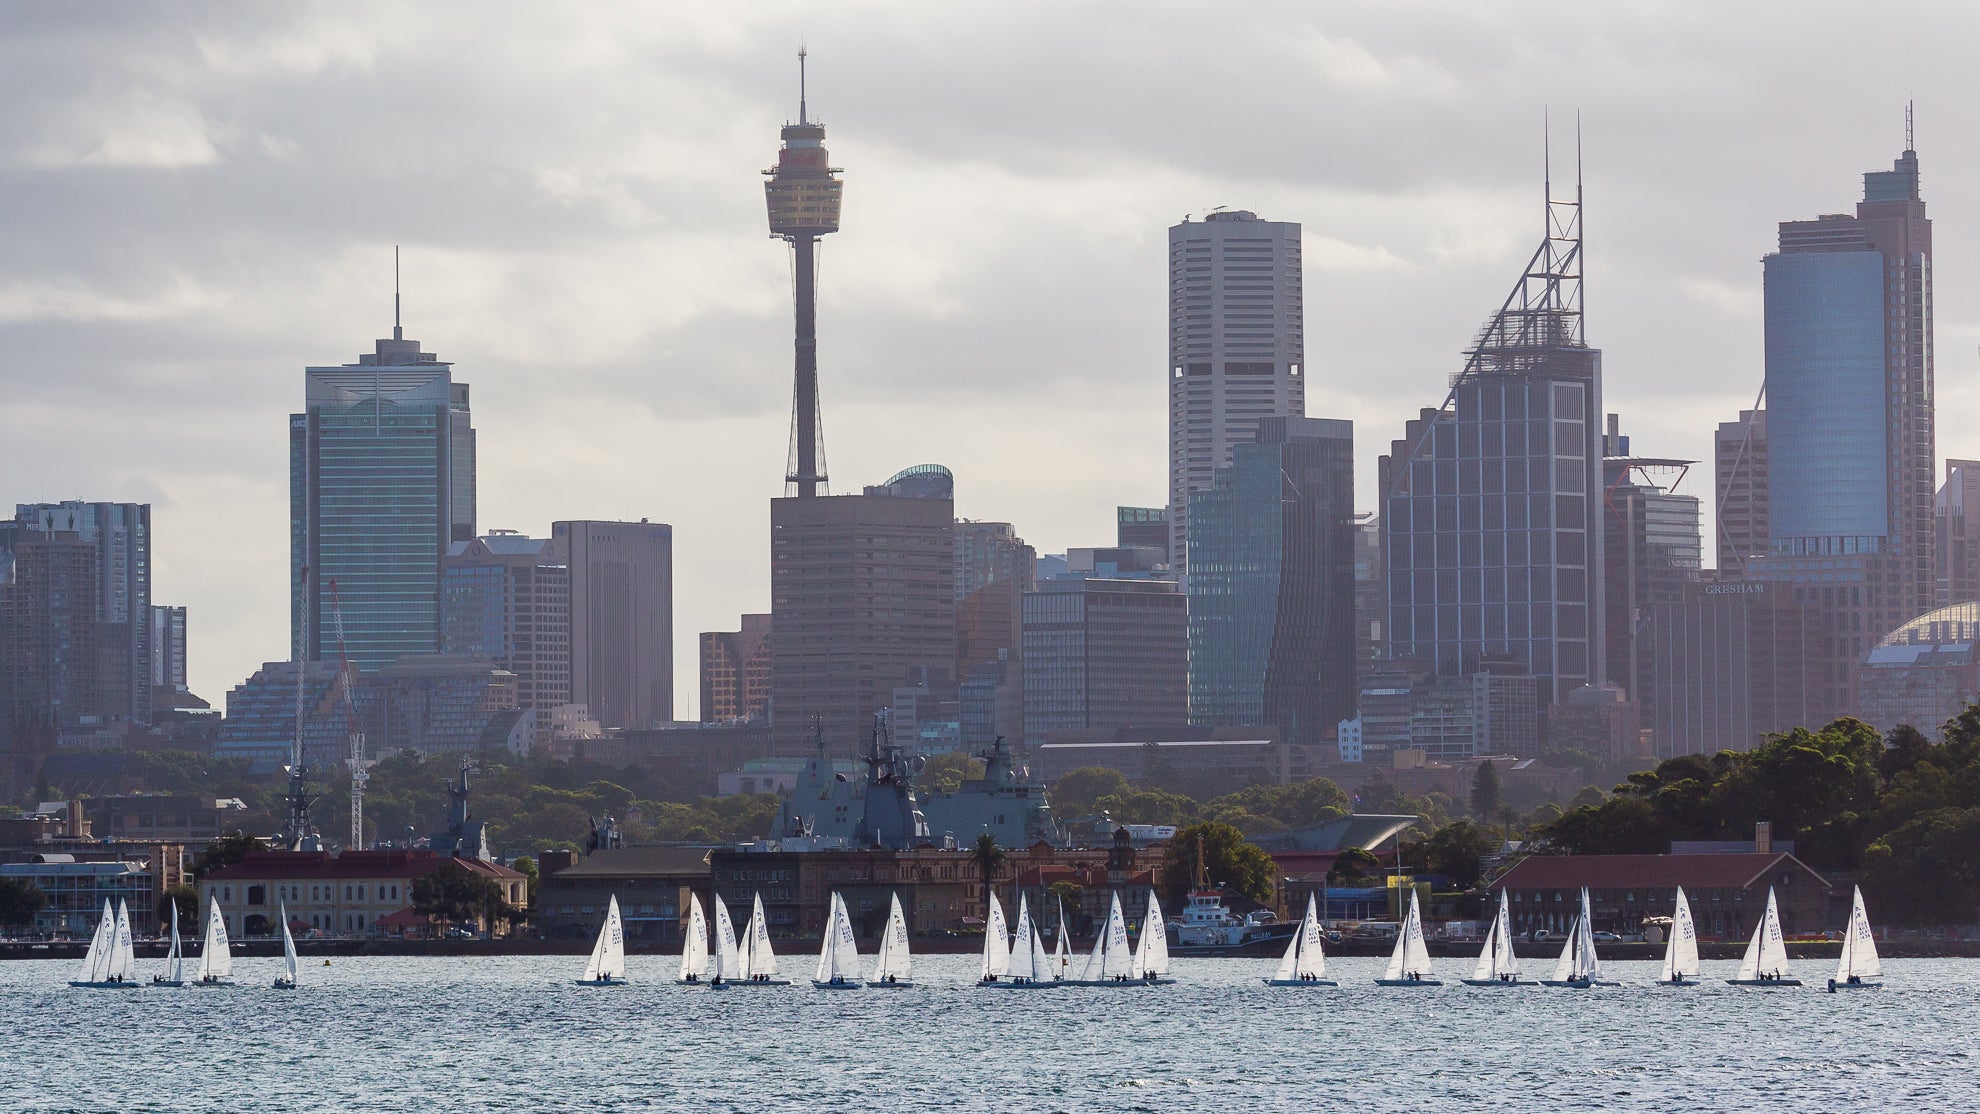 Sydney Fleet